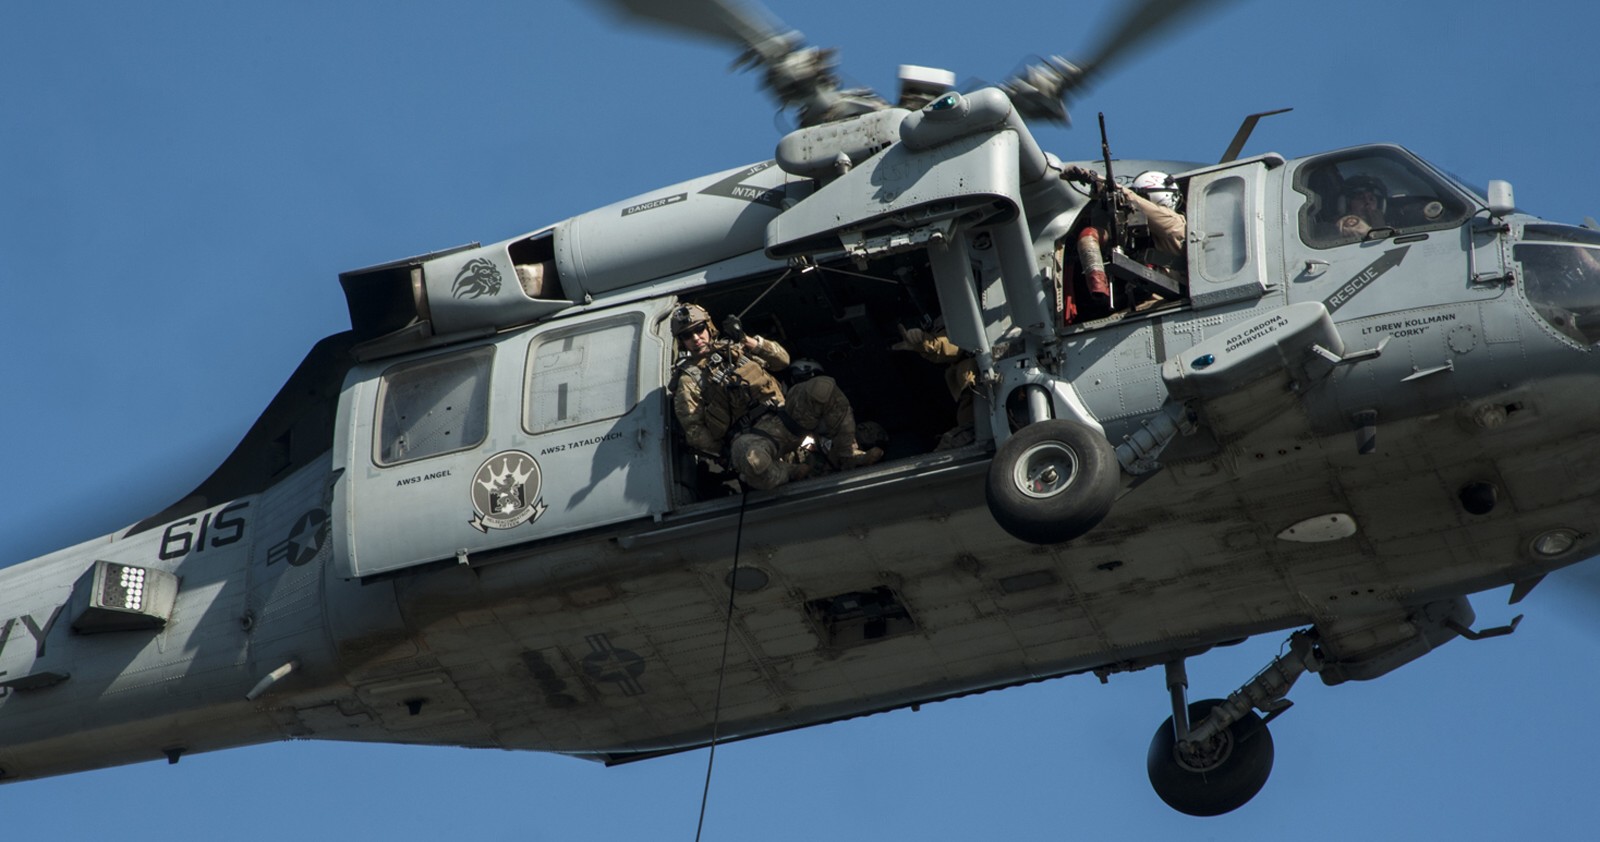 hsc-15 red lions helicopter sea combat squadron us navy mh-60s seahawk cvw-17 uss carl vinson cvn-70 84